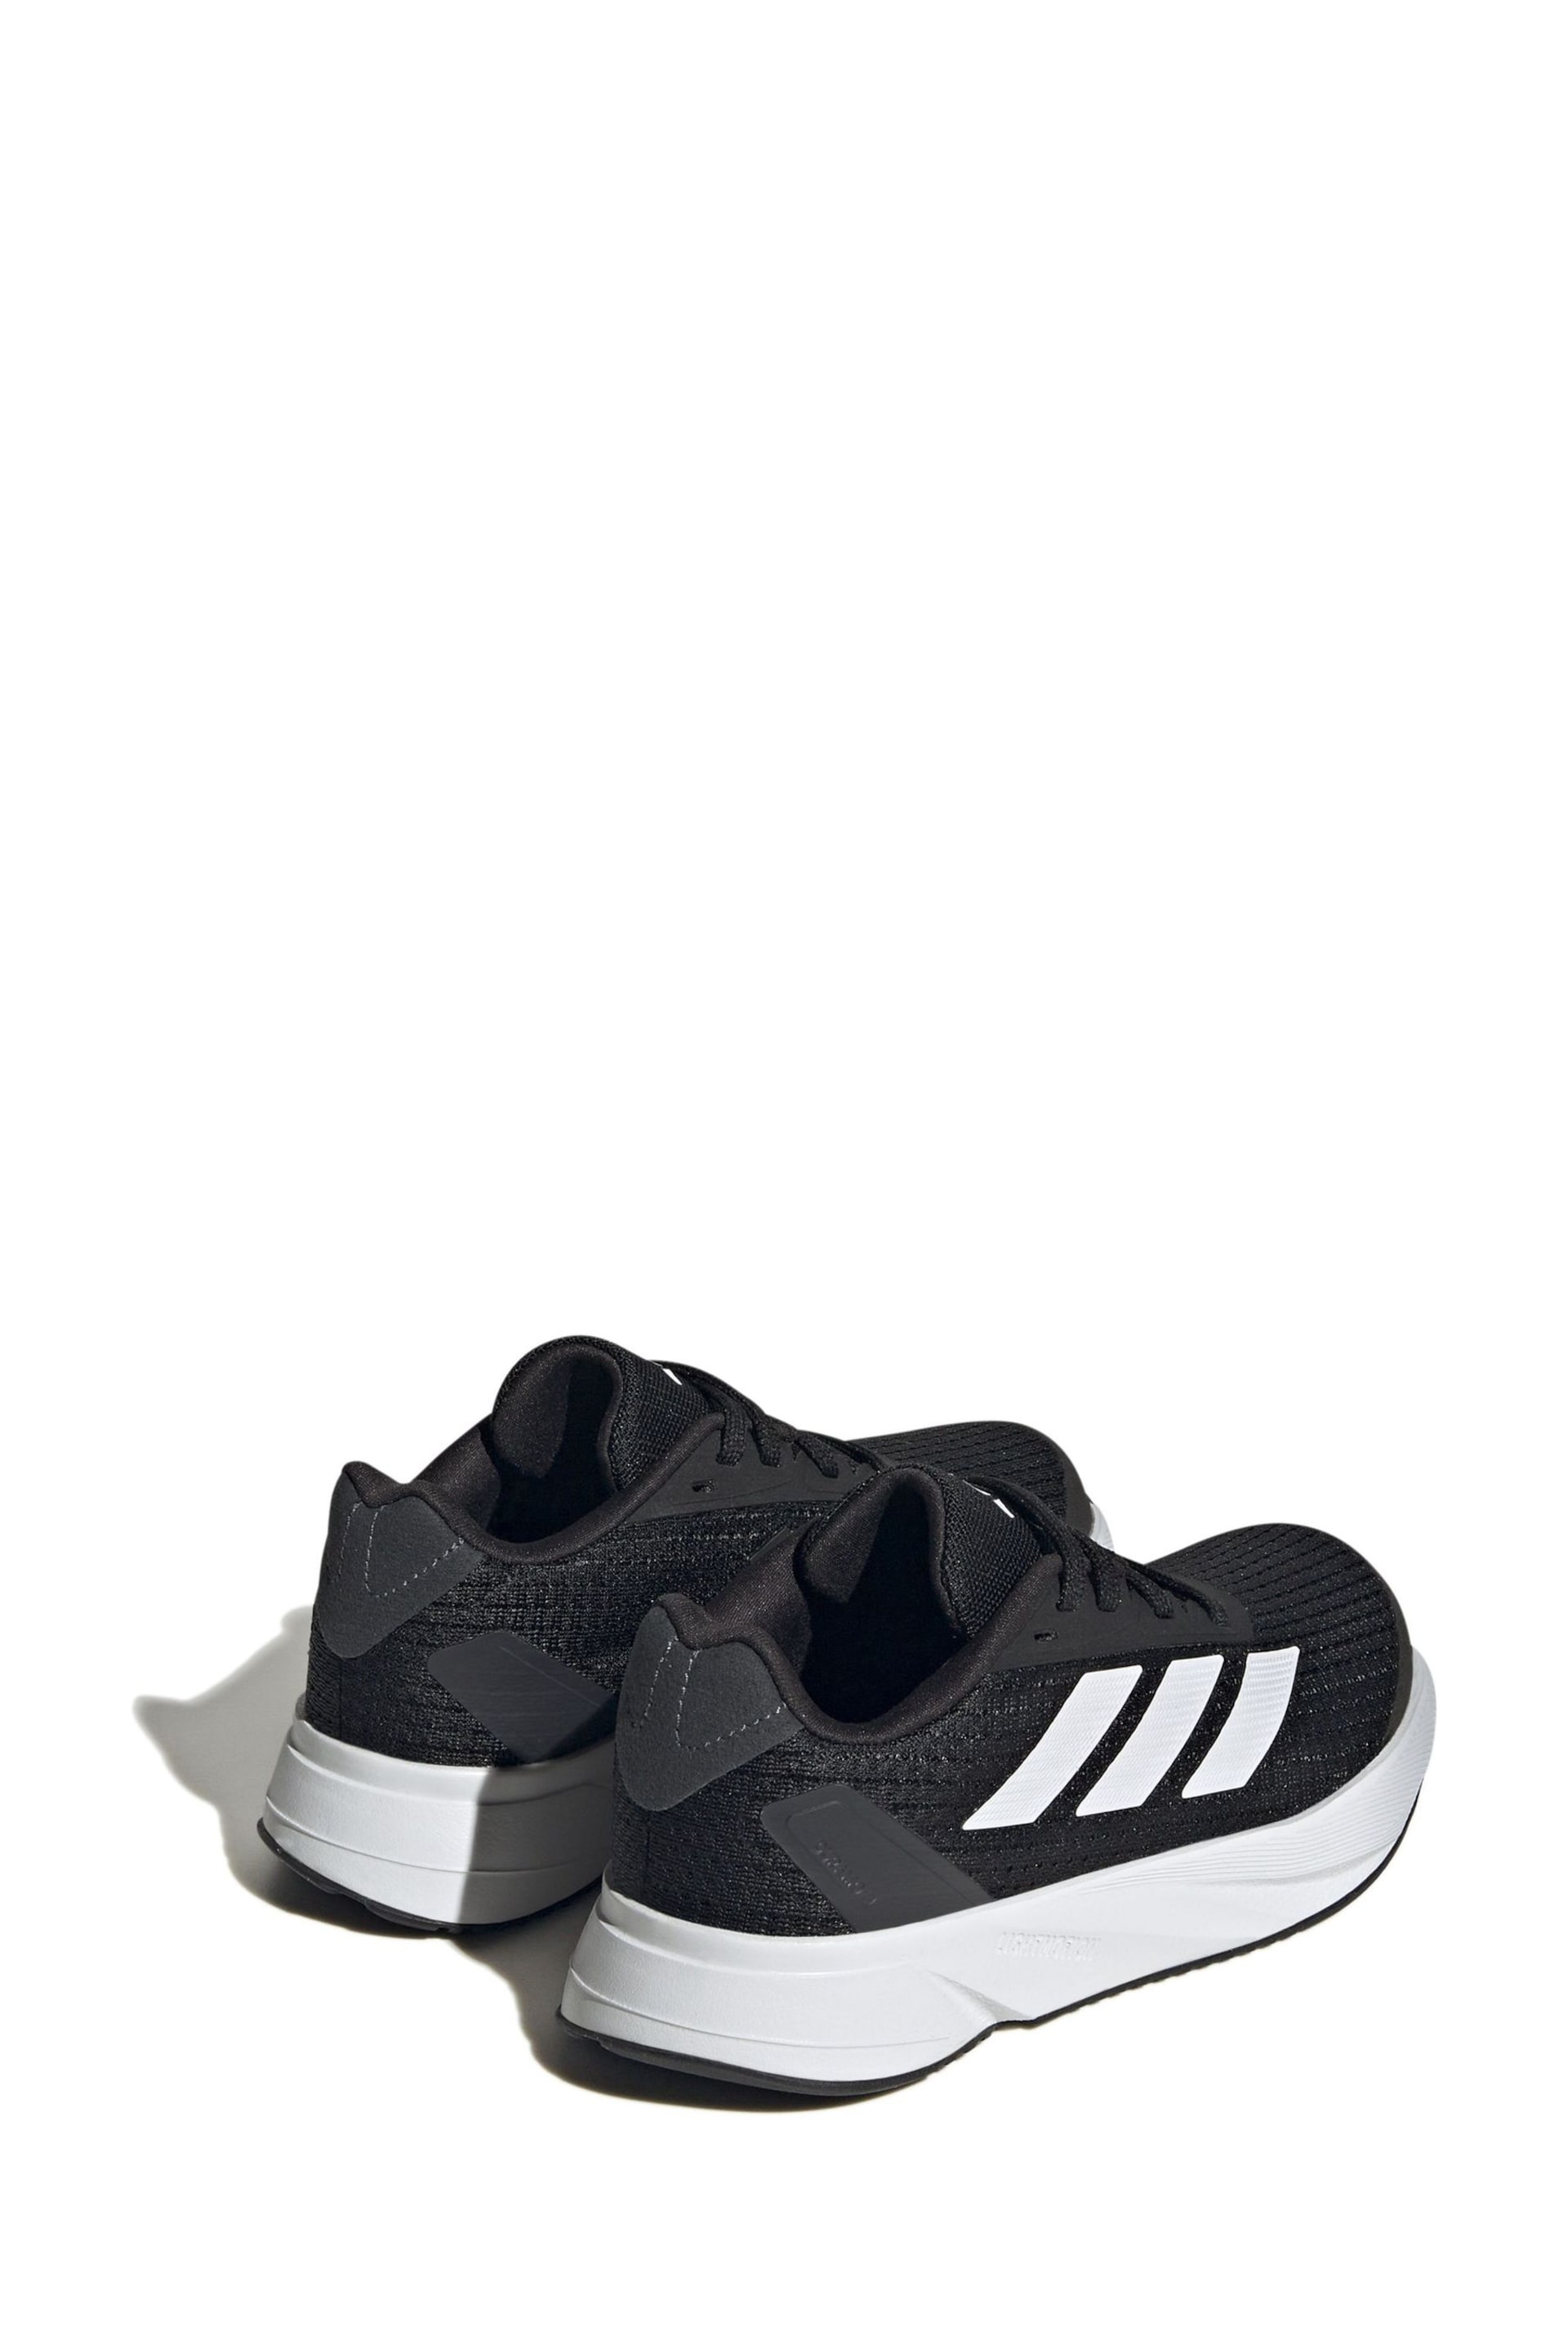 adidas Black/White Kids Duramo Shoes - Image 4 of 7